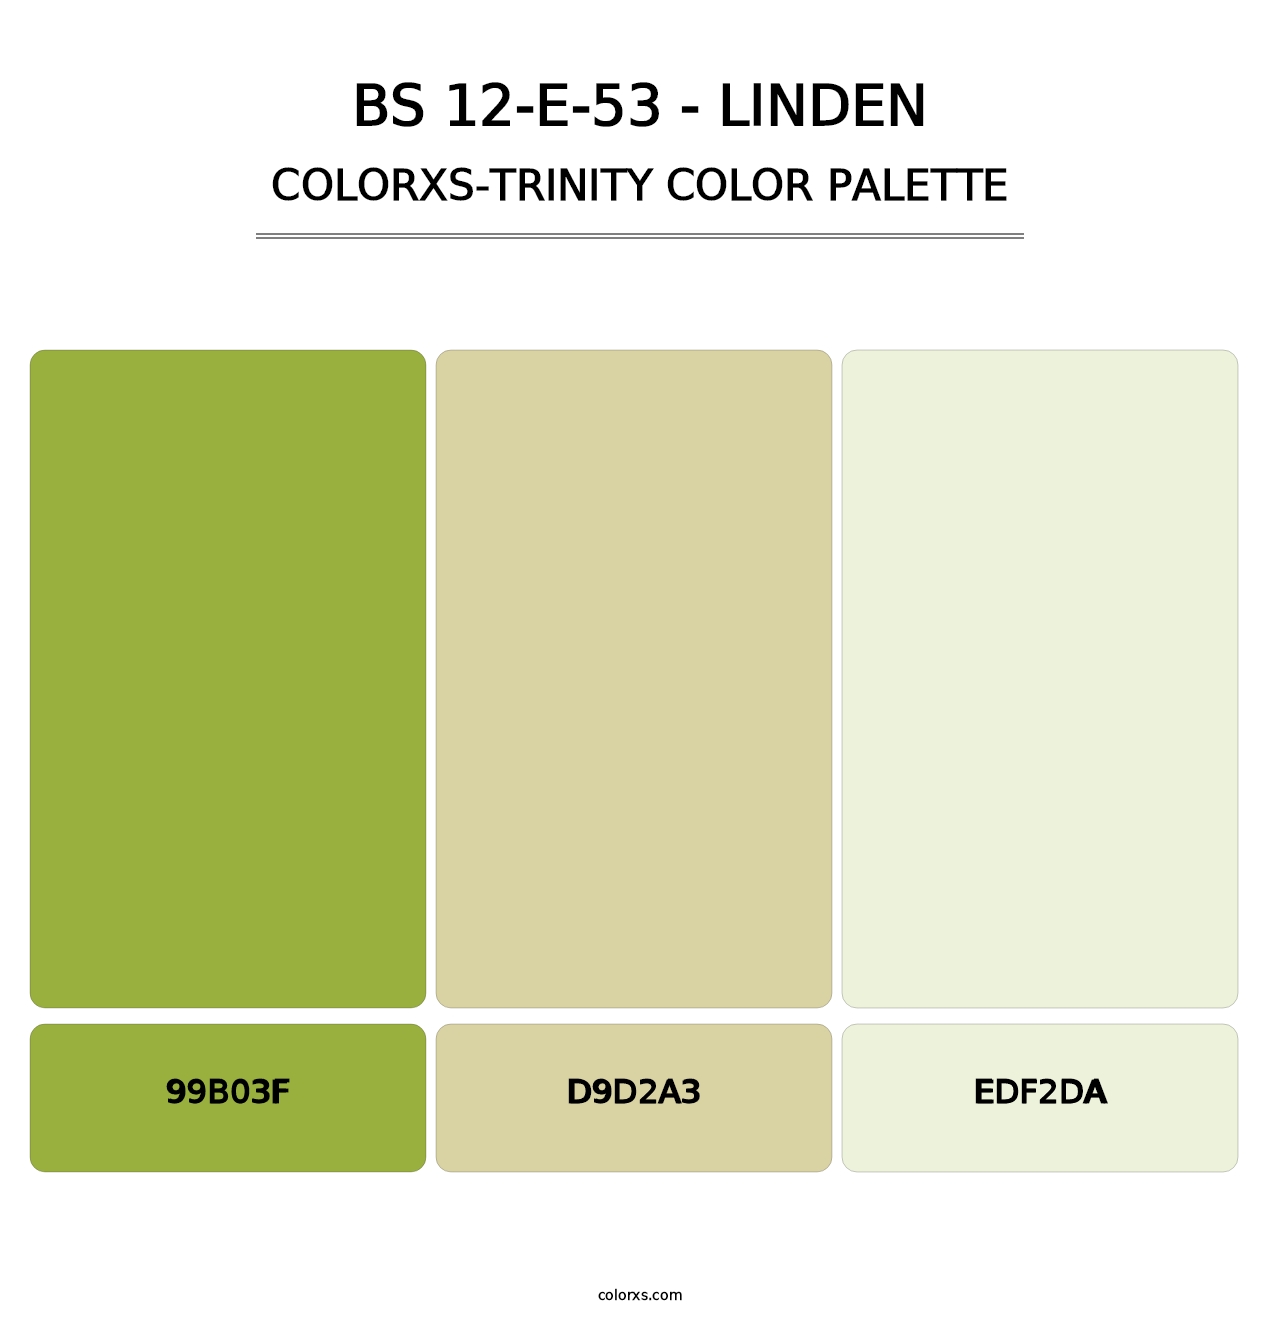 BS 12-E-53 - Linden - Colorxs Trinity Palette